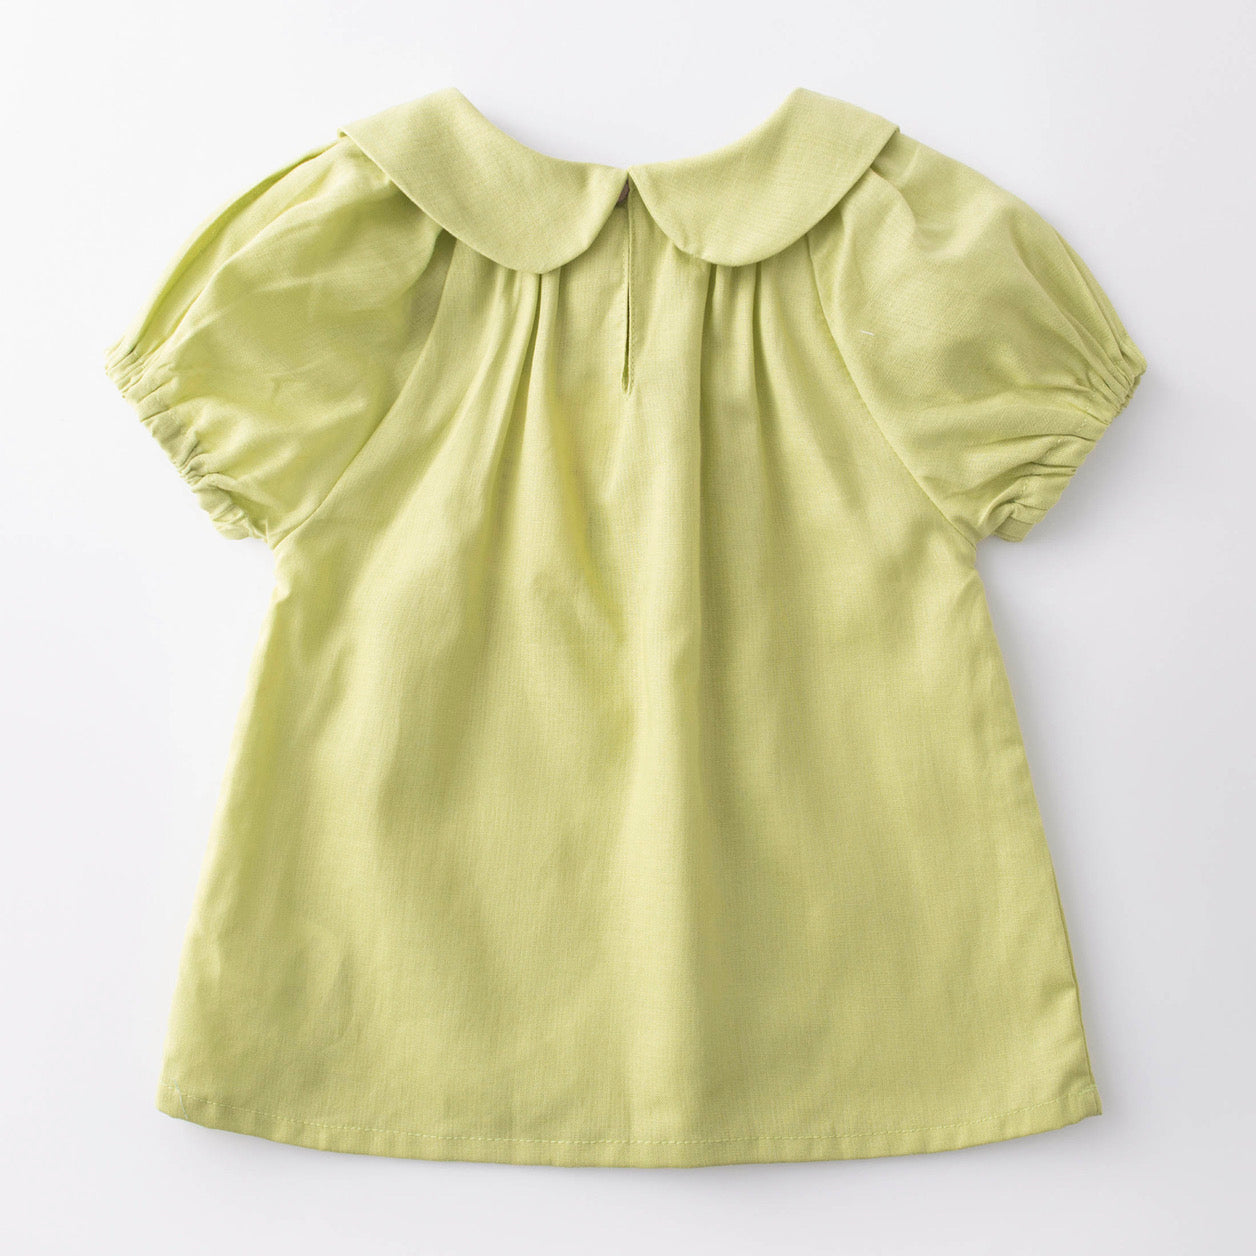 Lime short sleeve blouse